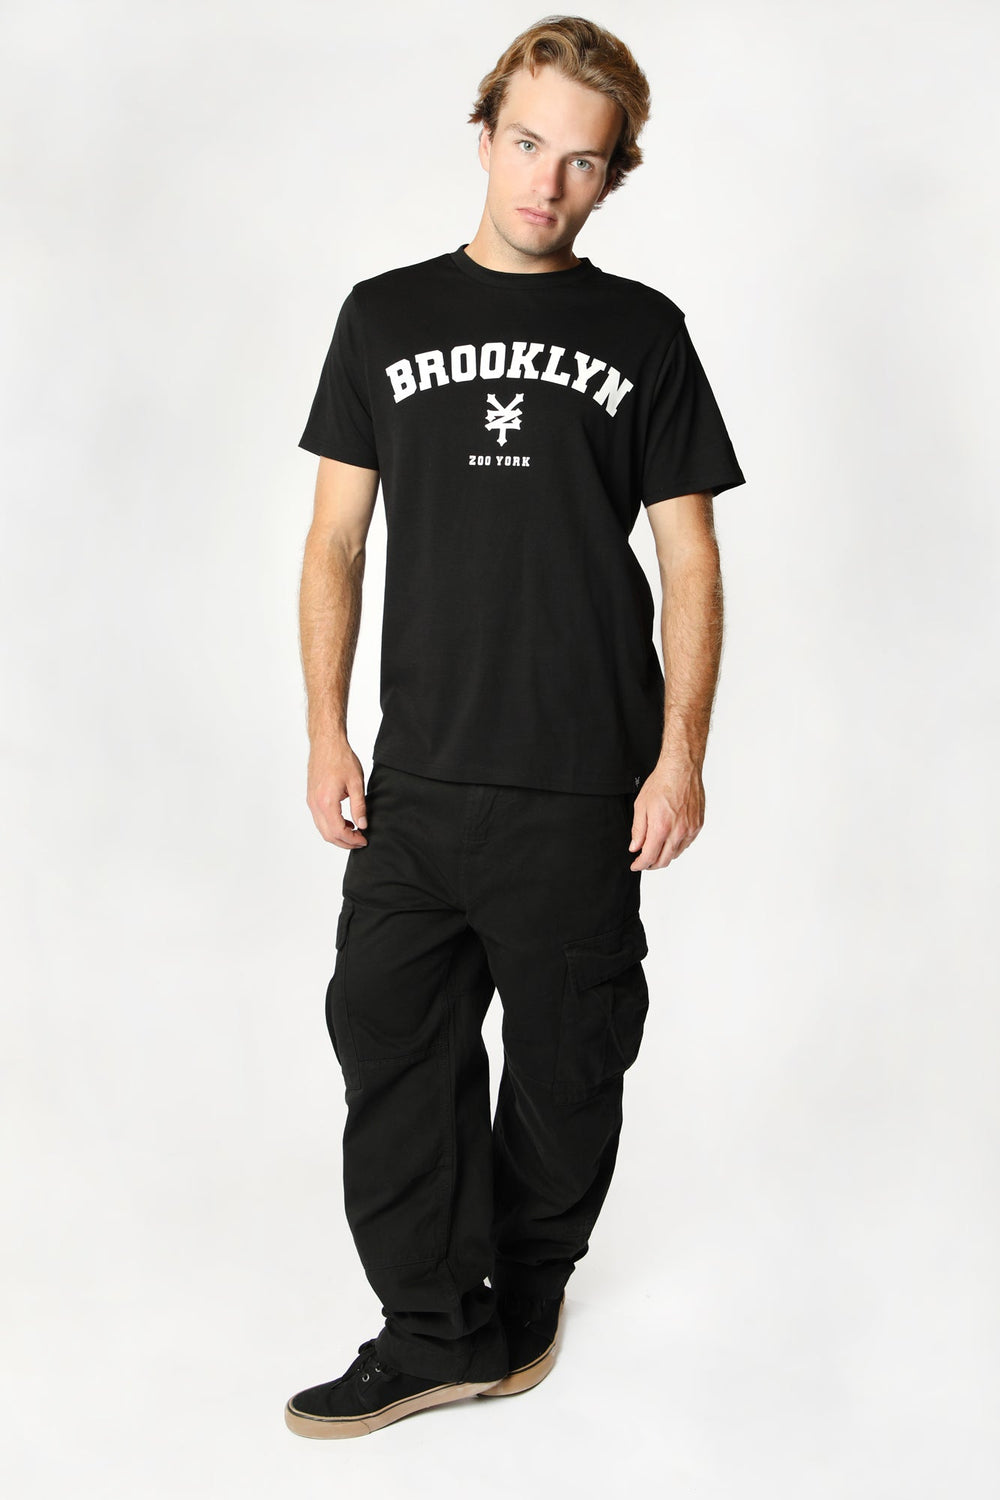 T-Shirt Imprimé Logo Brooklyn Zoo York Homme Noir